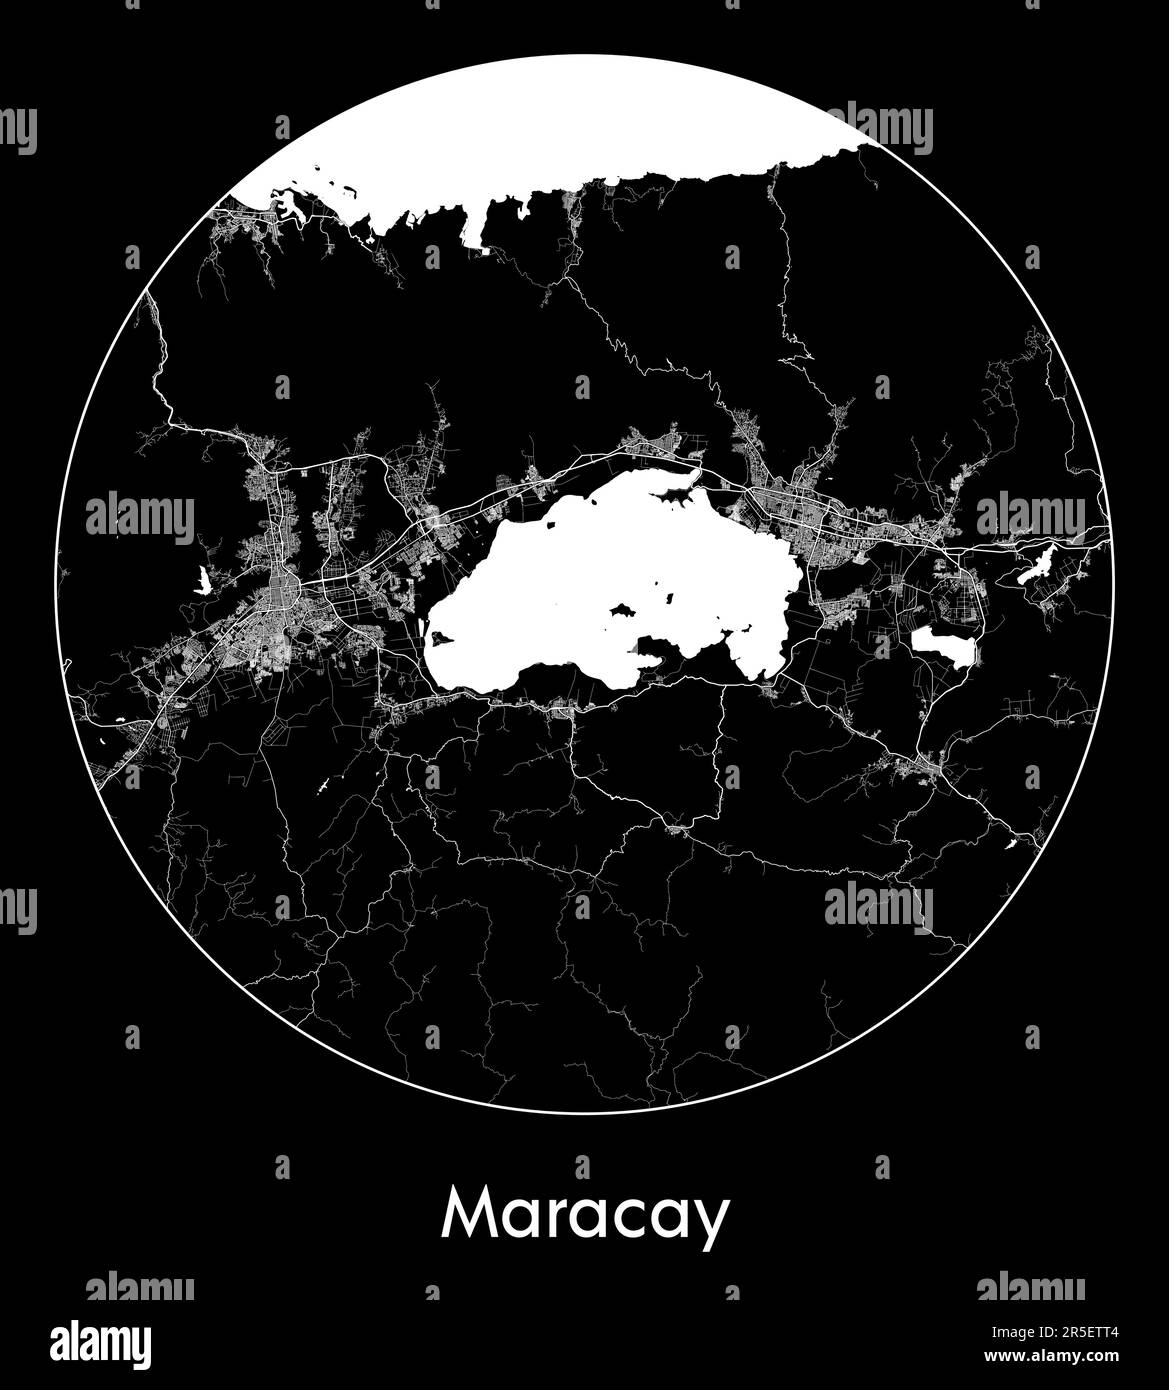 City Map Maracay Venezuela South America vector illustration Stock Vector